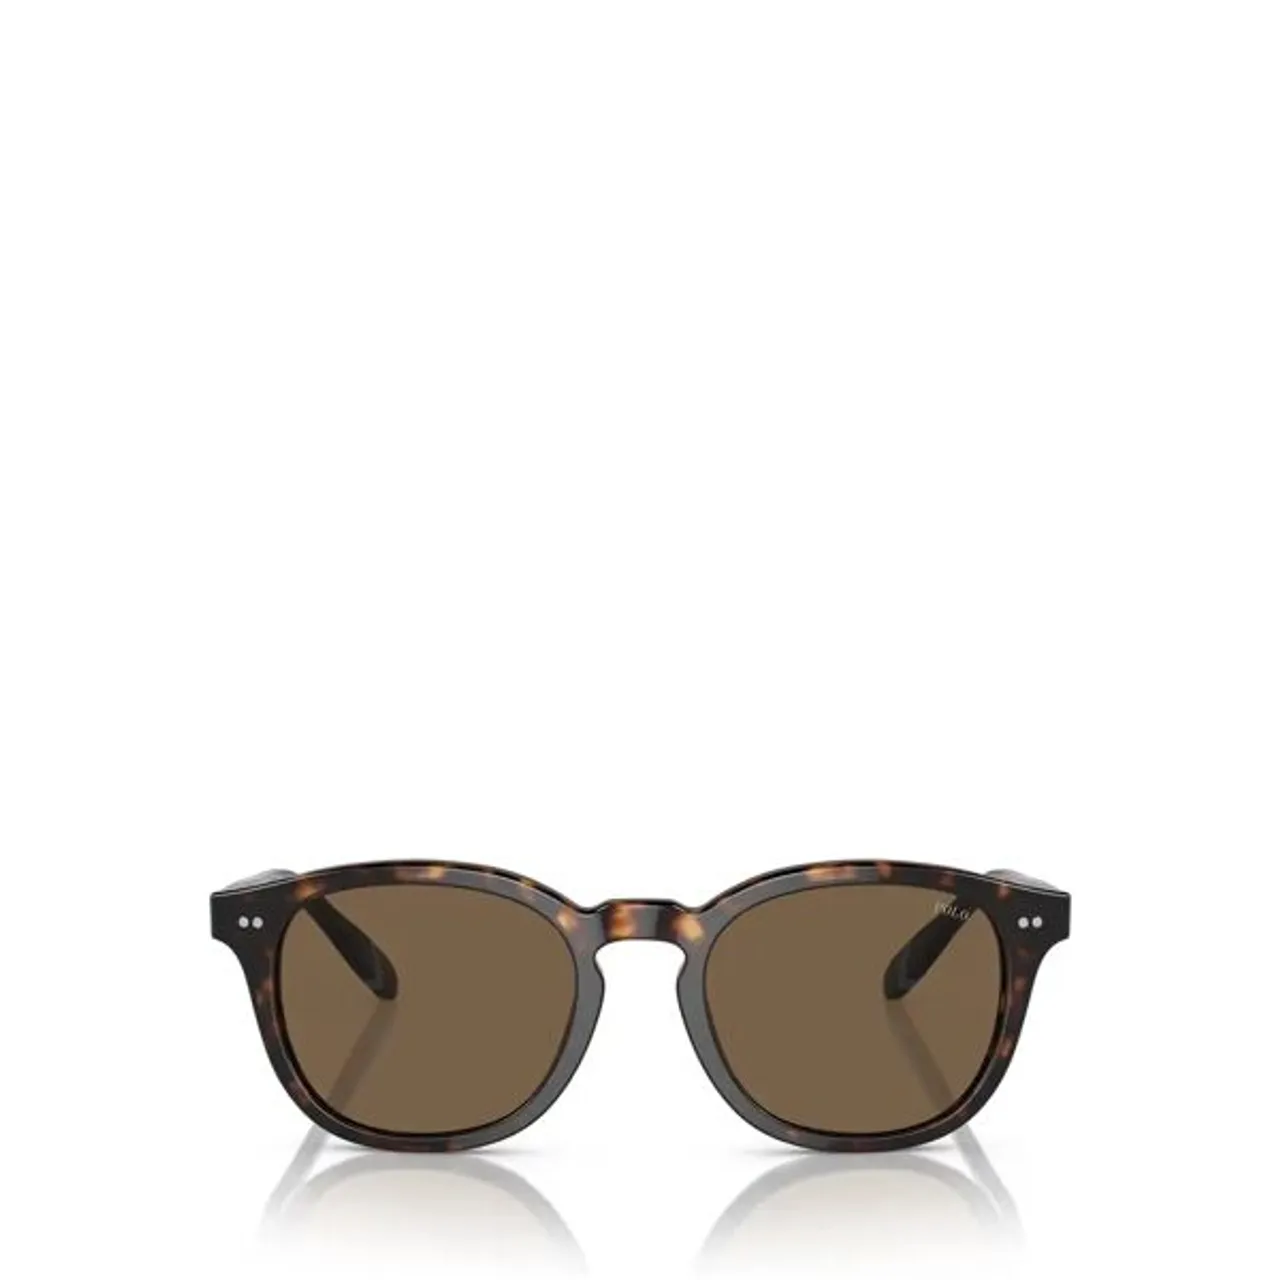 Ralph Lauren PH4206 Men's Phantos Sunglasses - Tortoiseshell/Brown - Male